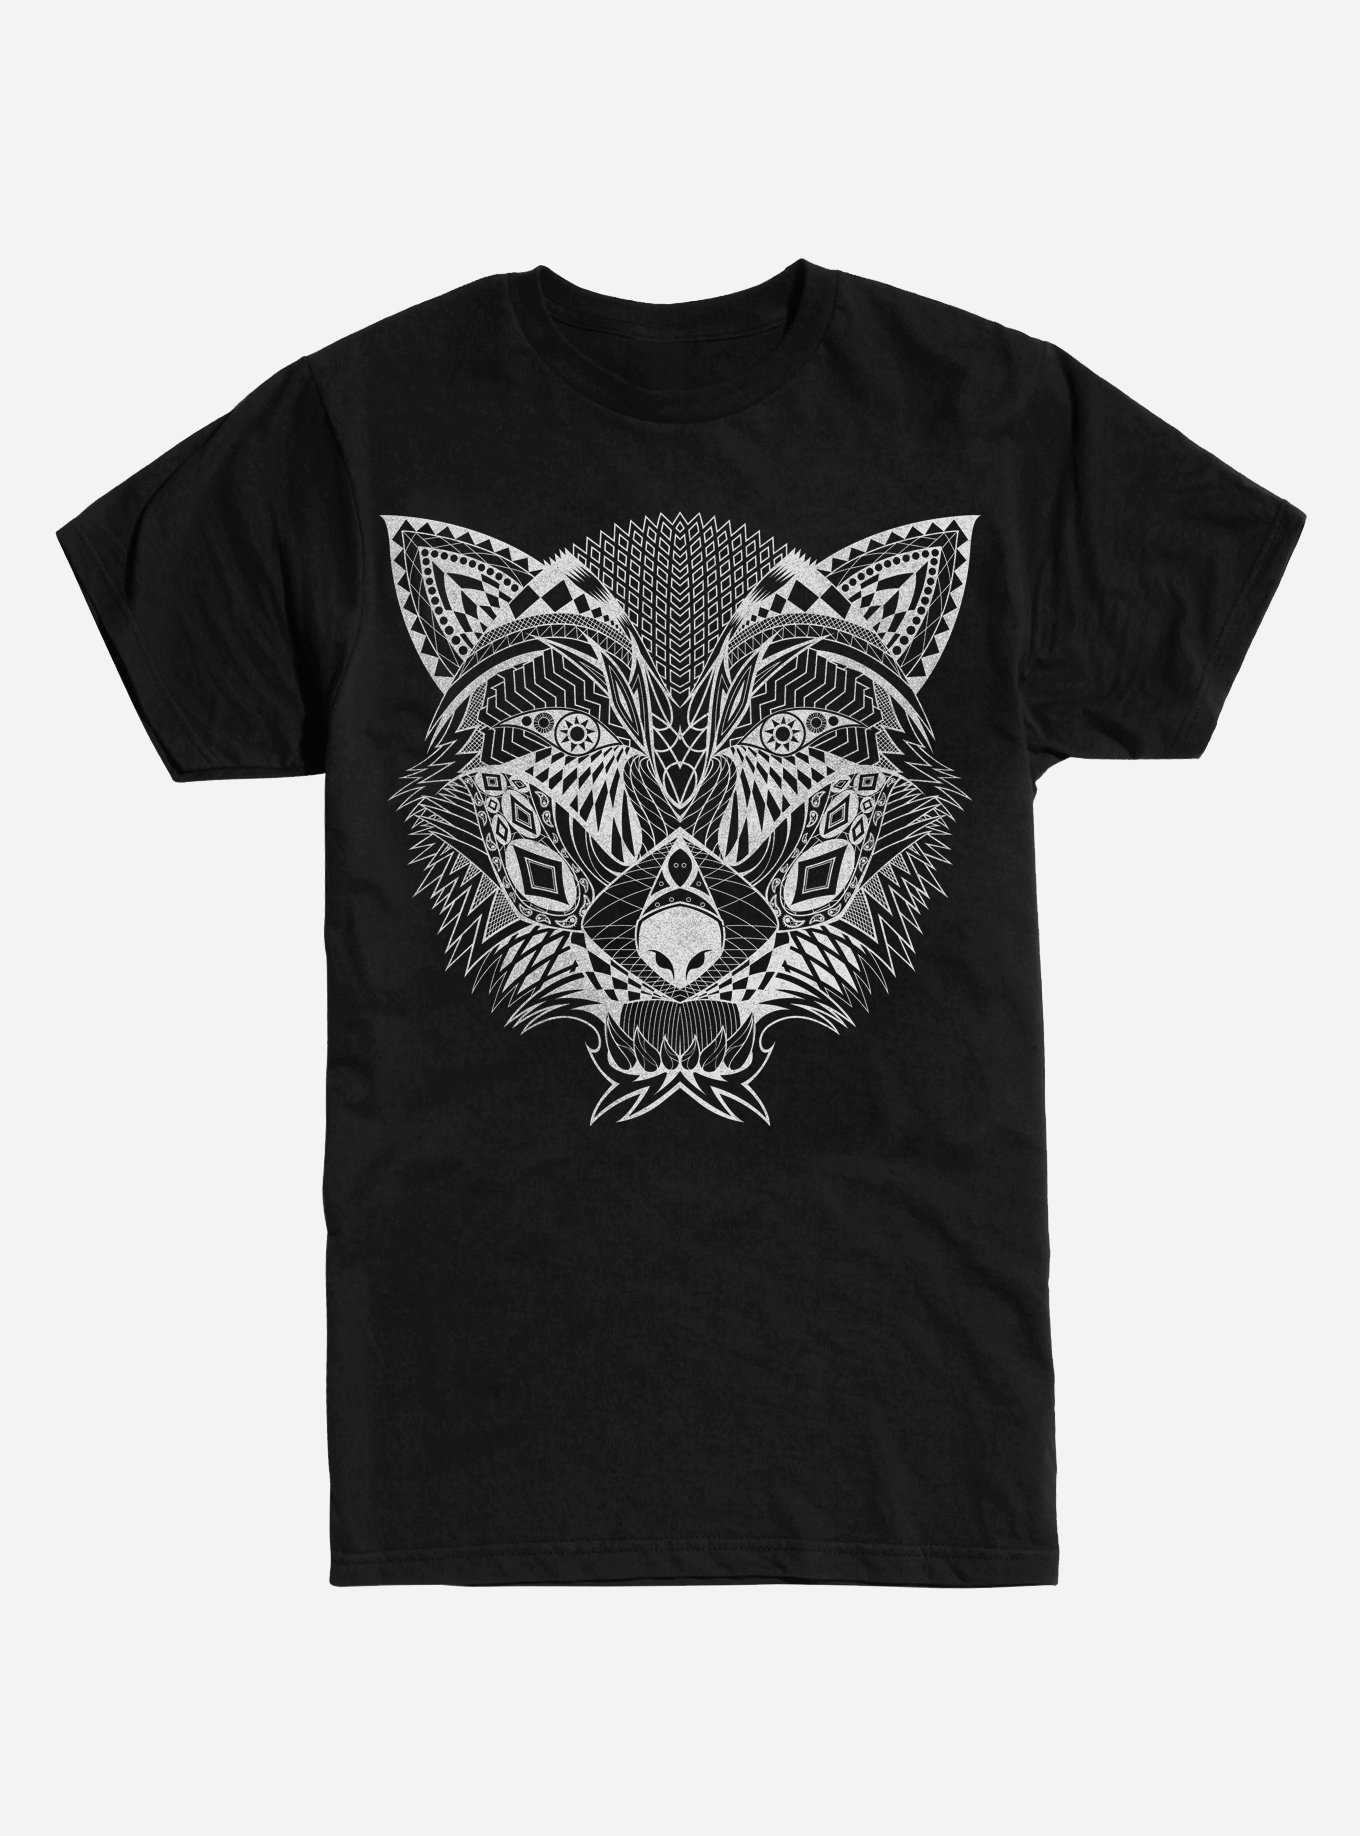 Ornage Wolf Head T-Shirt, , hi-res